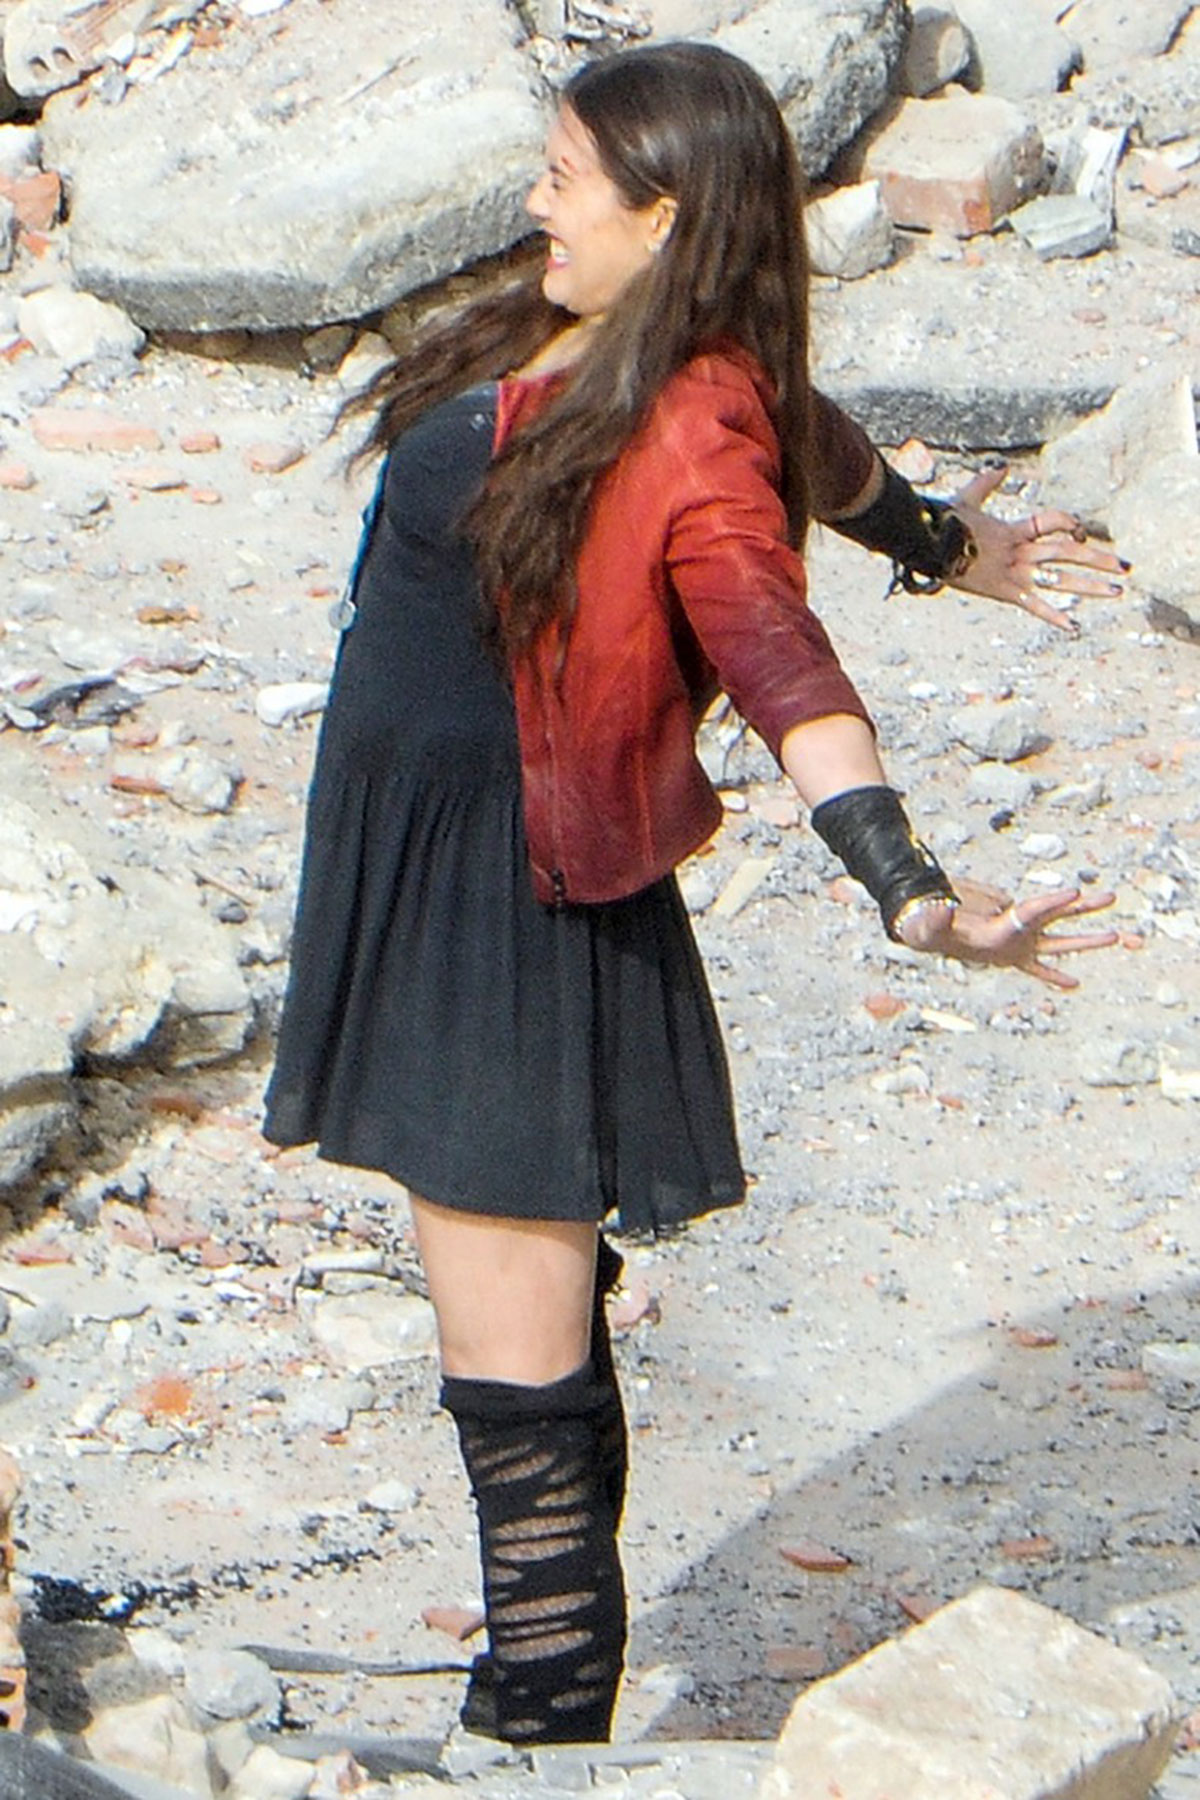 Elizabeth Olsen at Avengers 2 Age Of Ultron